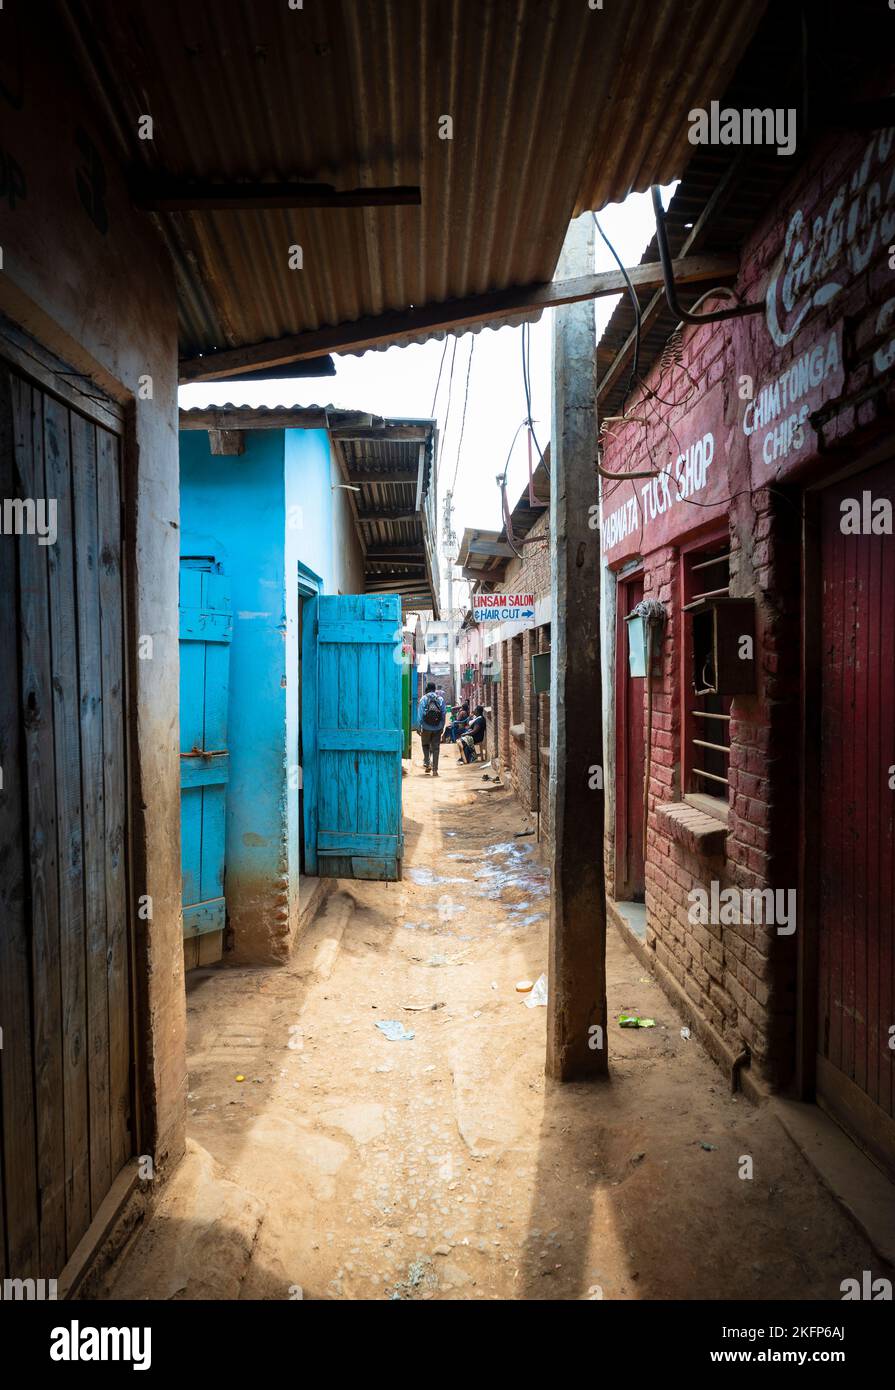 A narrow street alleyway in Mzuzu market, Malawi Stock Photo